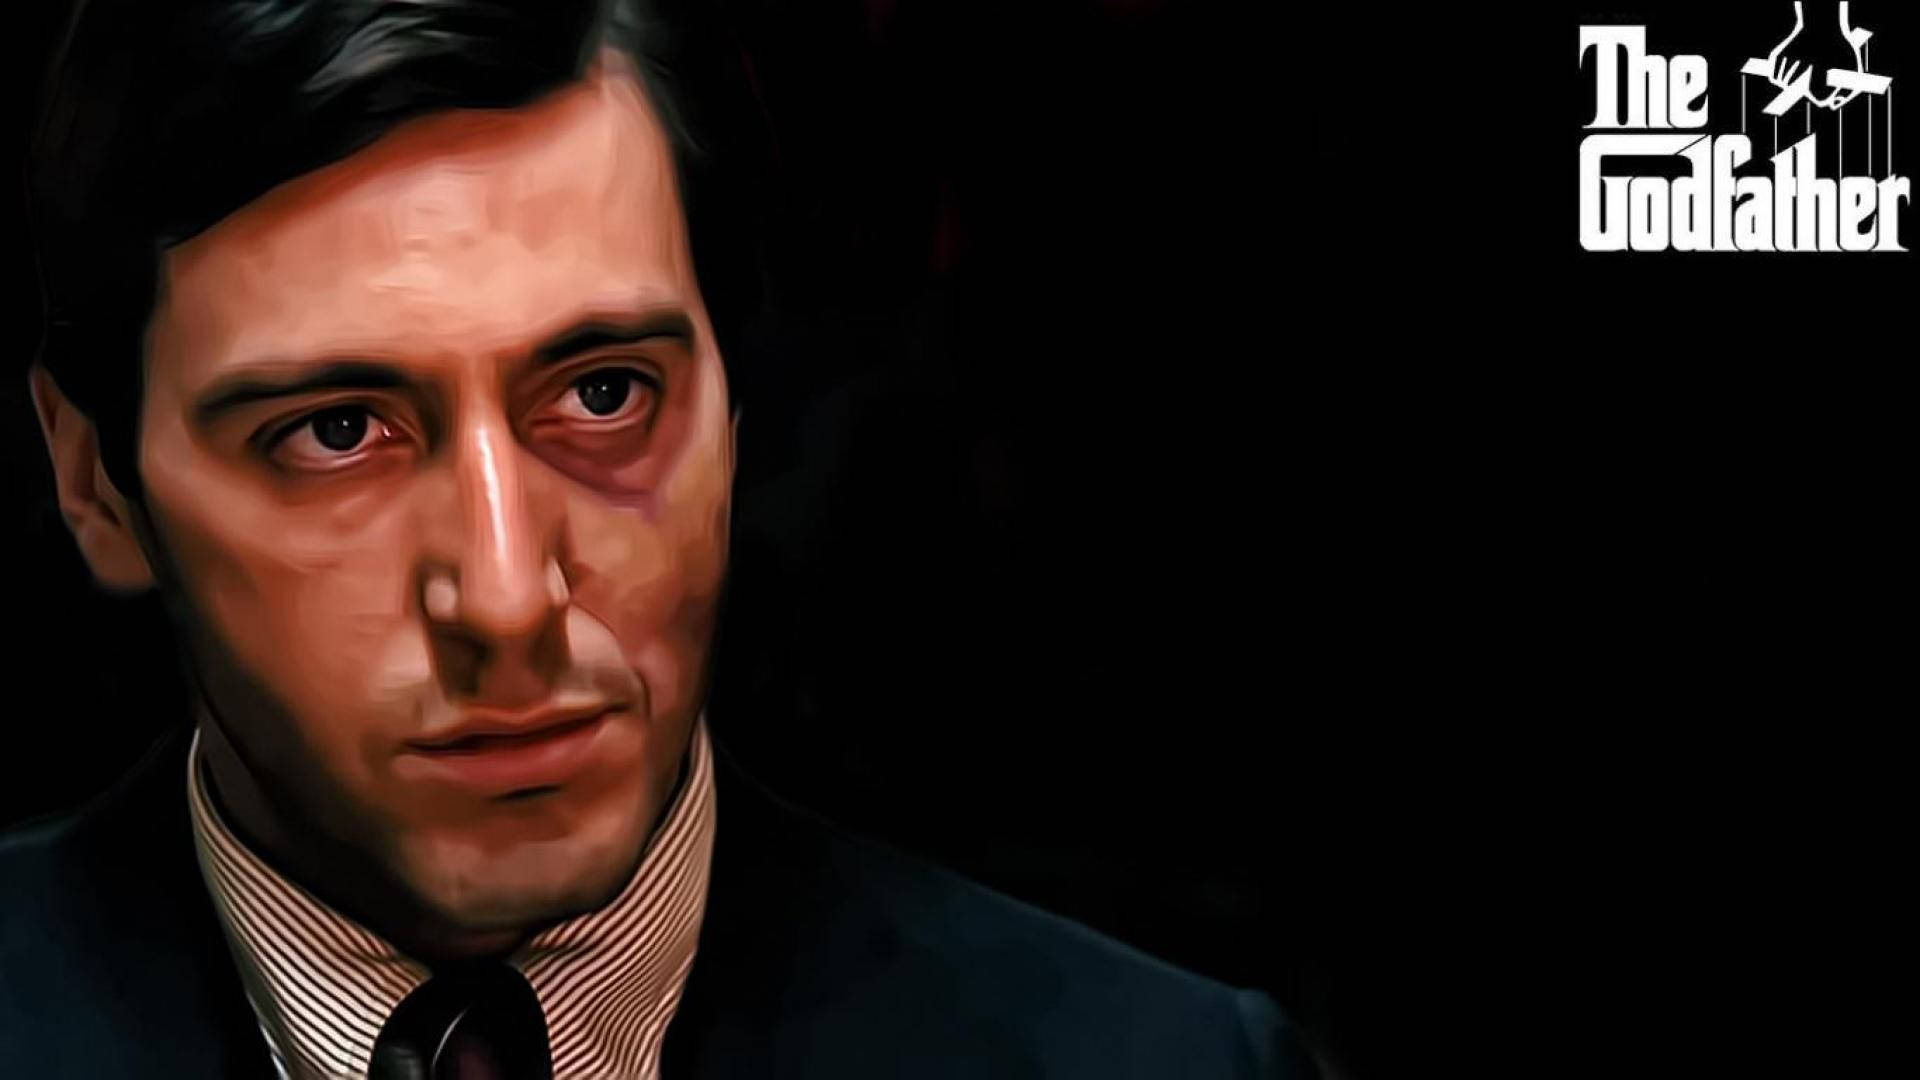 Al Pacino Godfather Painting Wallpaper